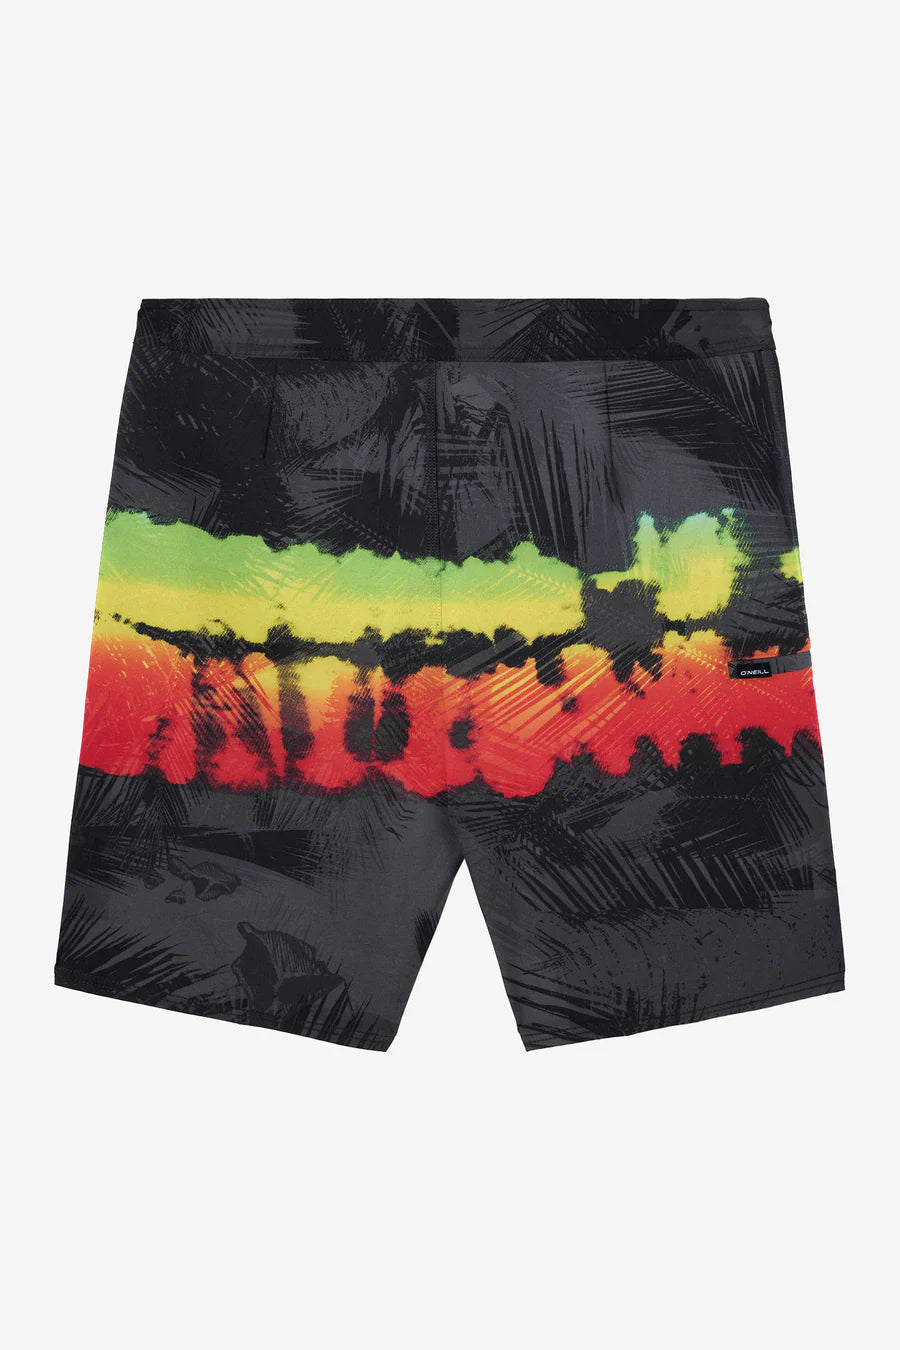 Hyperfreak Heat Hawaii 20" Board Shorts - Rasta